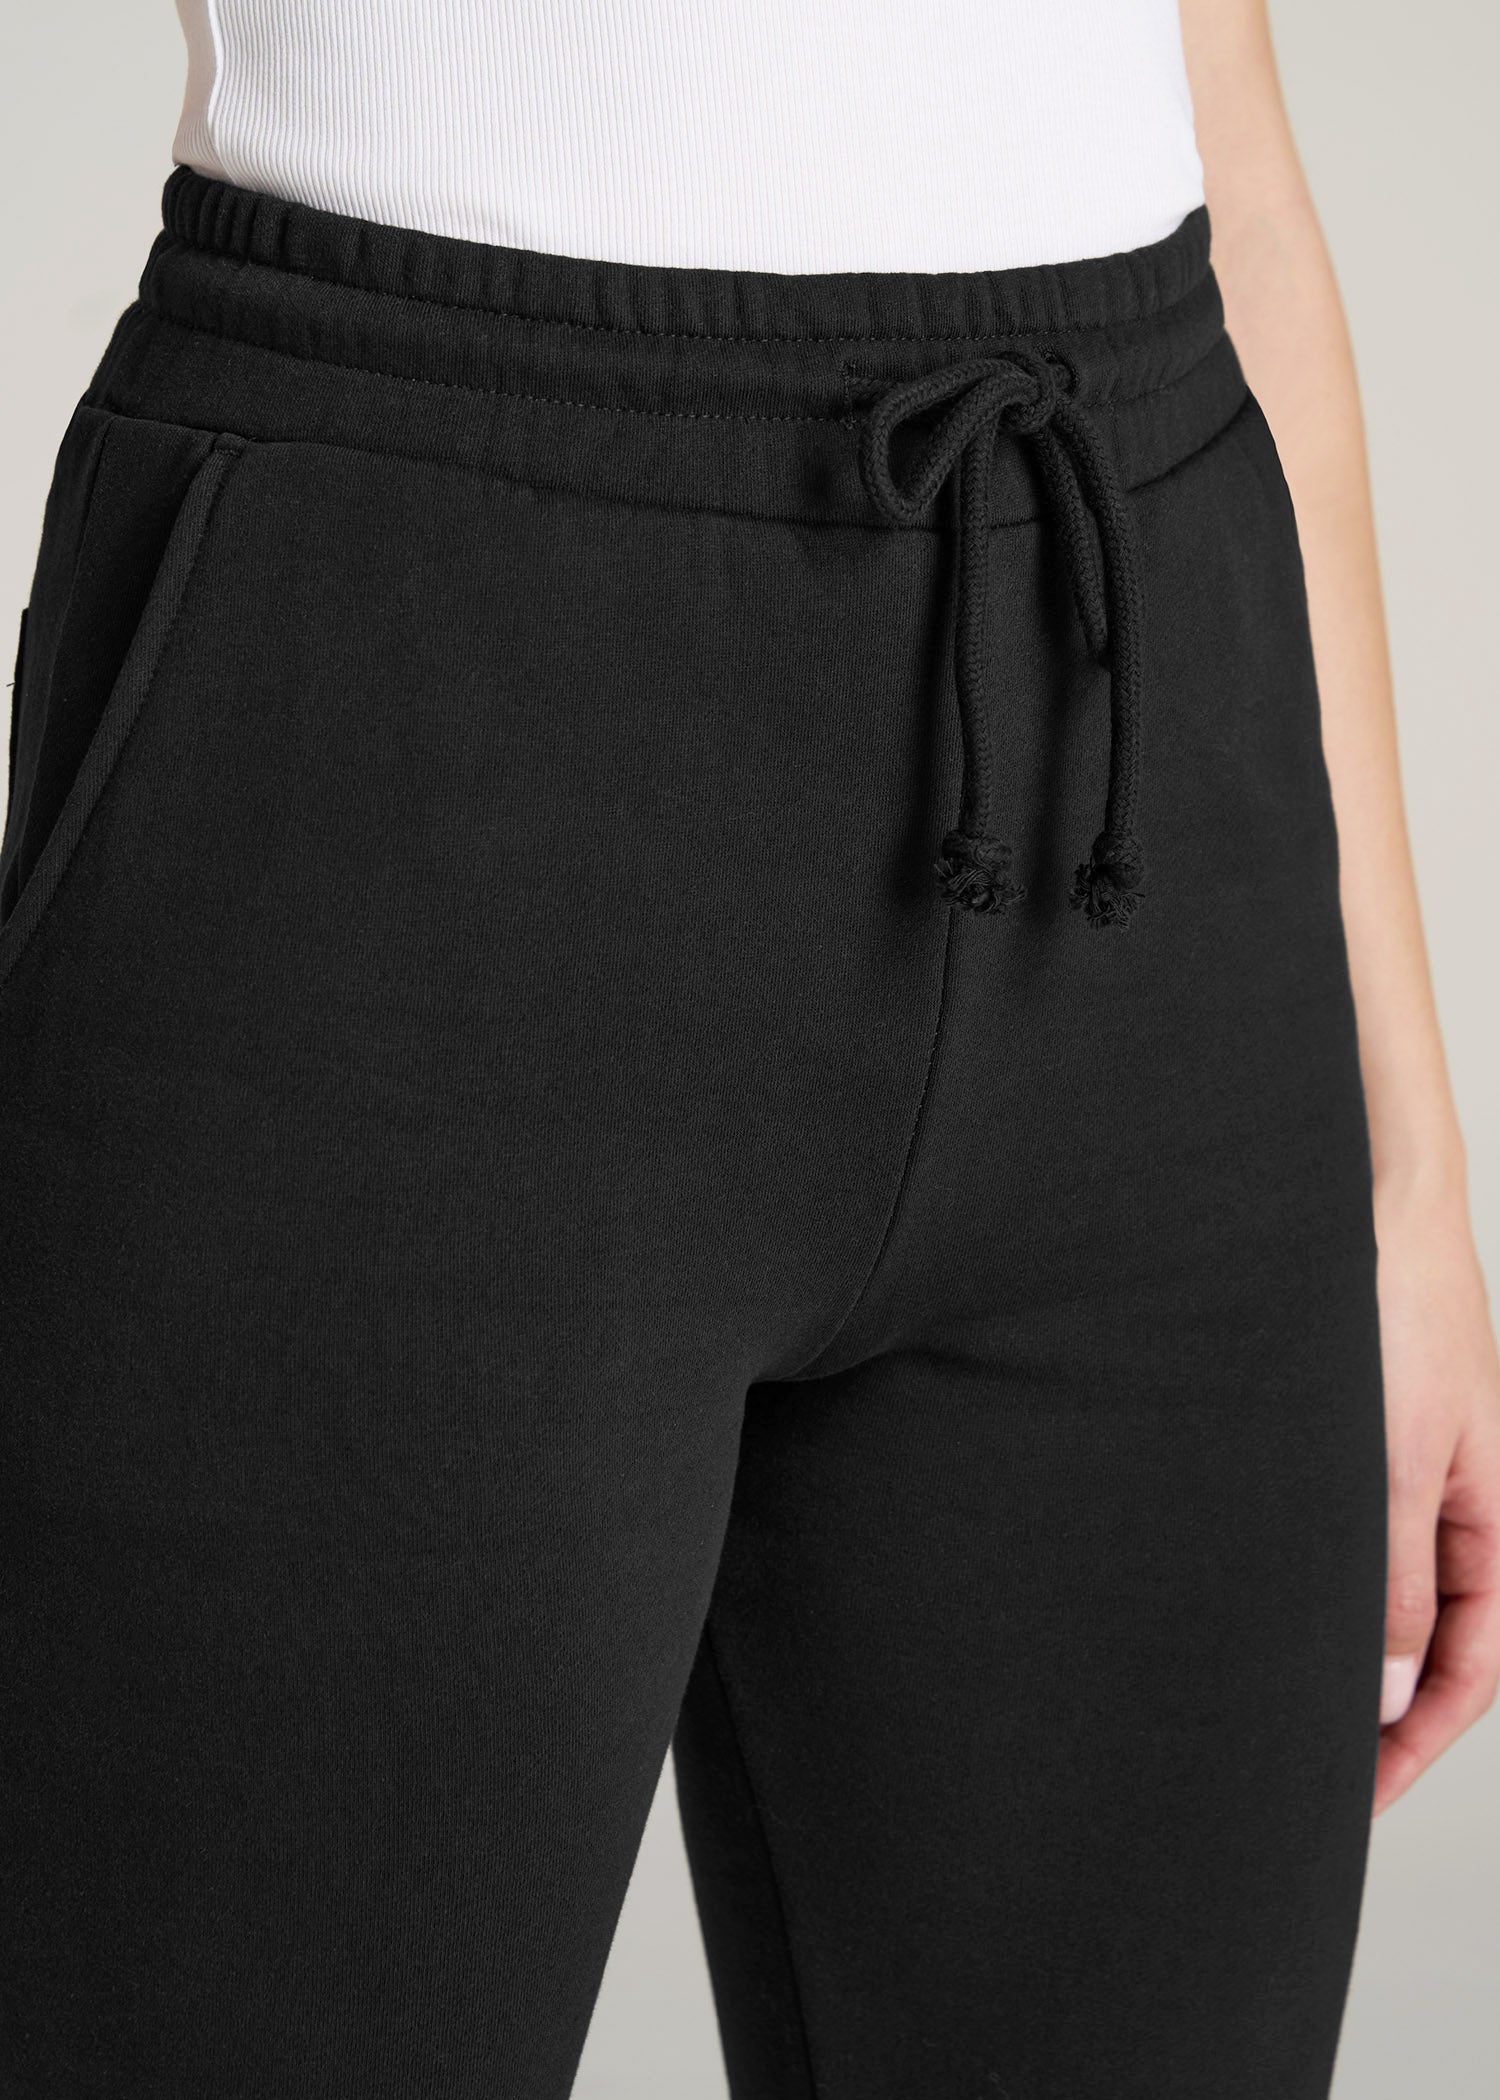 Slim Sweatpants Women's: High-Waisted Tall Women Black Sweatpants